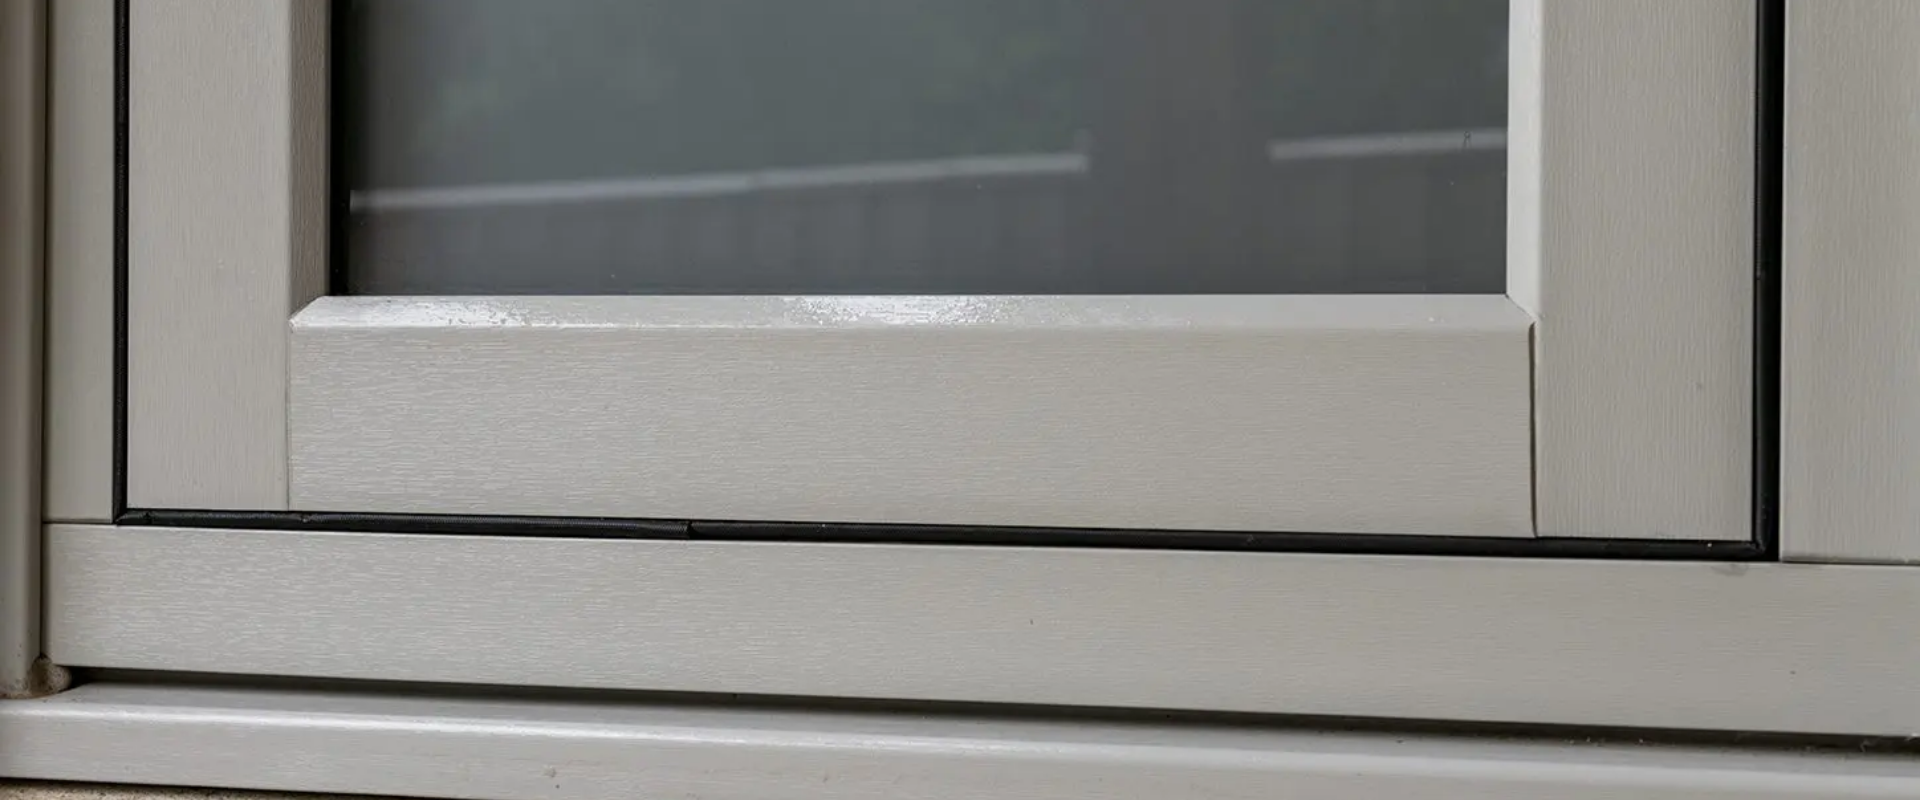 Close up view of white flush window seam